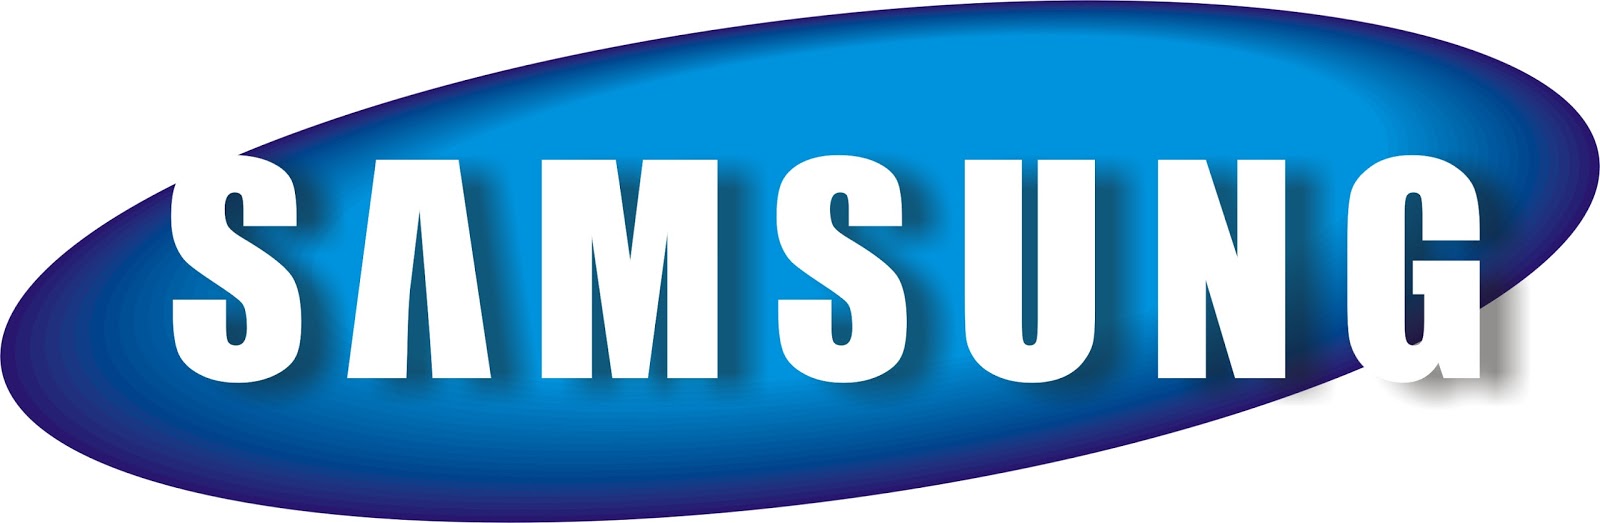 Samsung HD PNG-PlusPNG.com-16